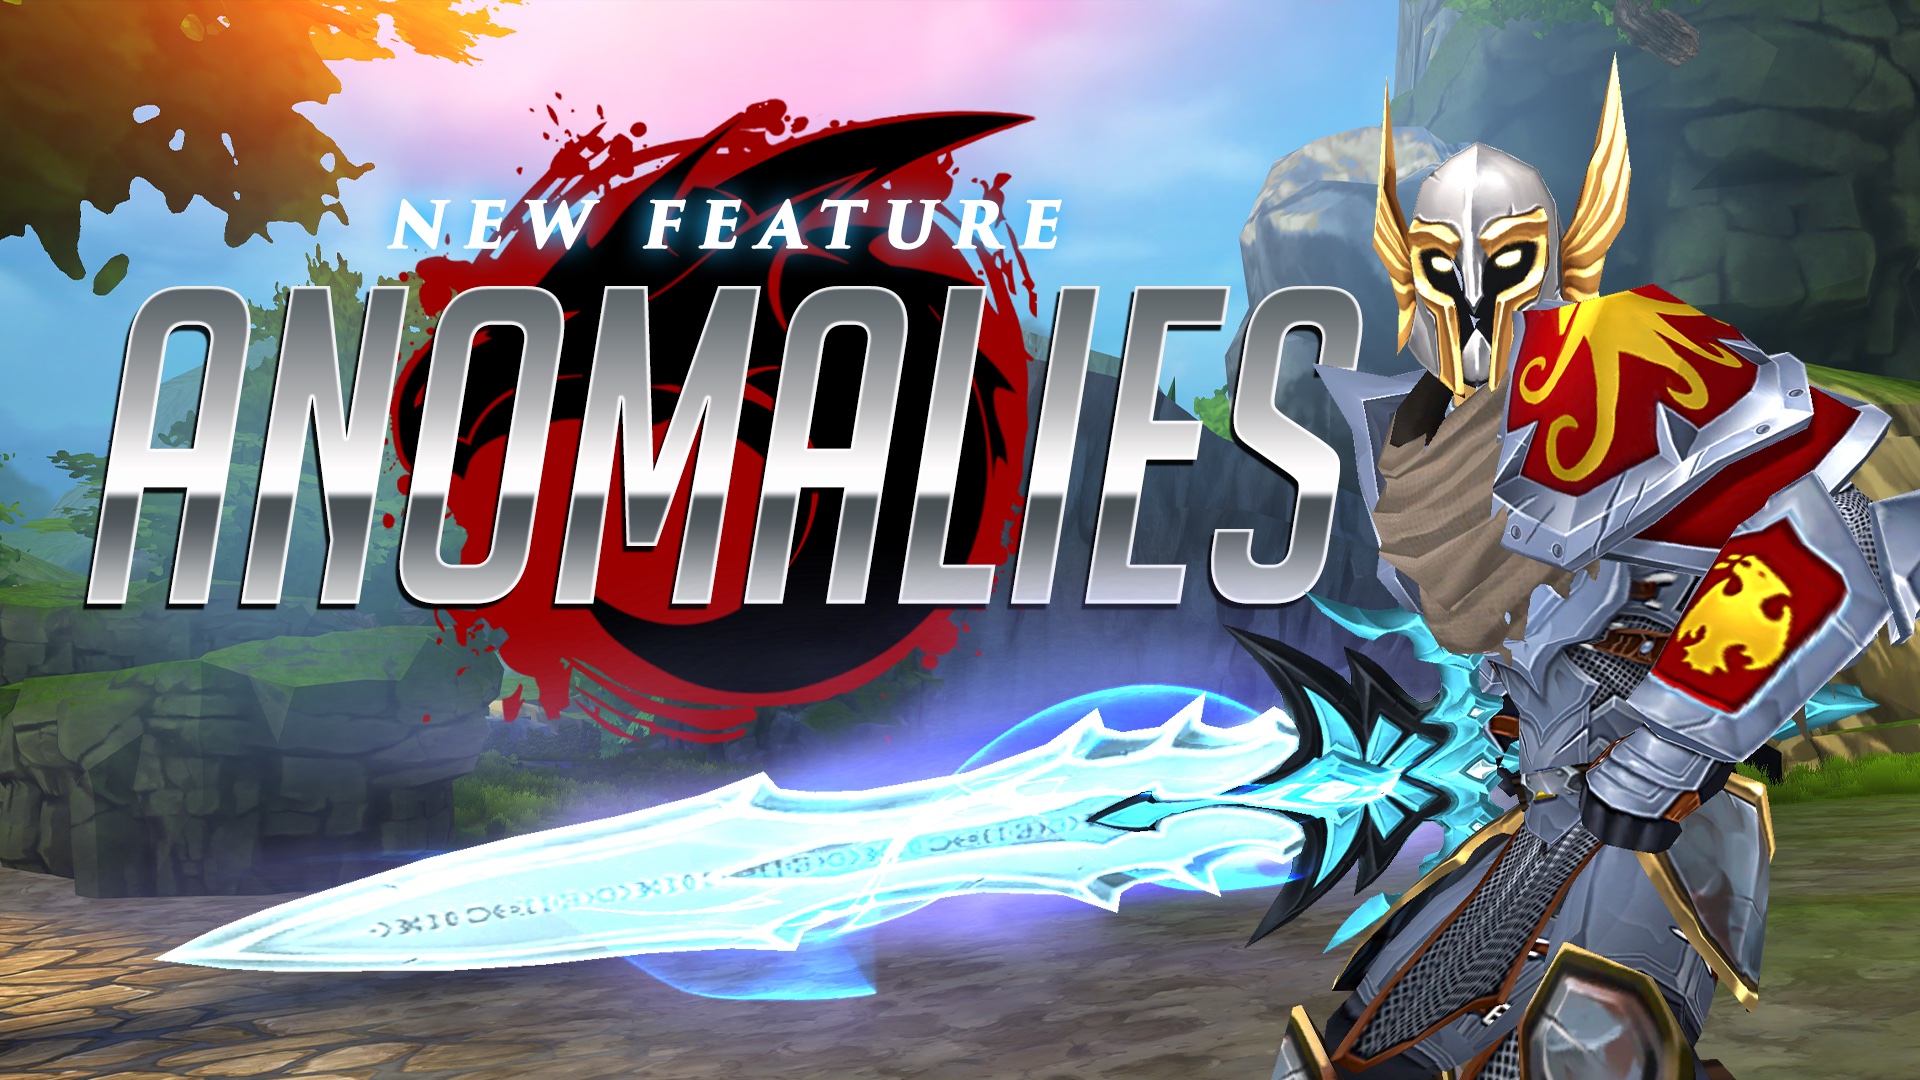 New Feature: Item Anomalies - Adventure Quest 3D, Cross Platform MMORPG